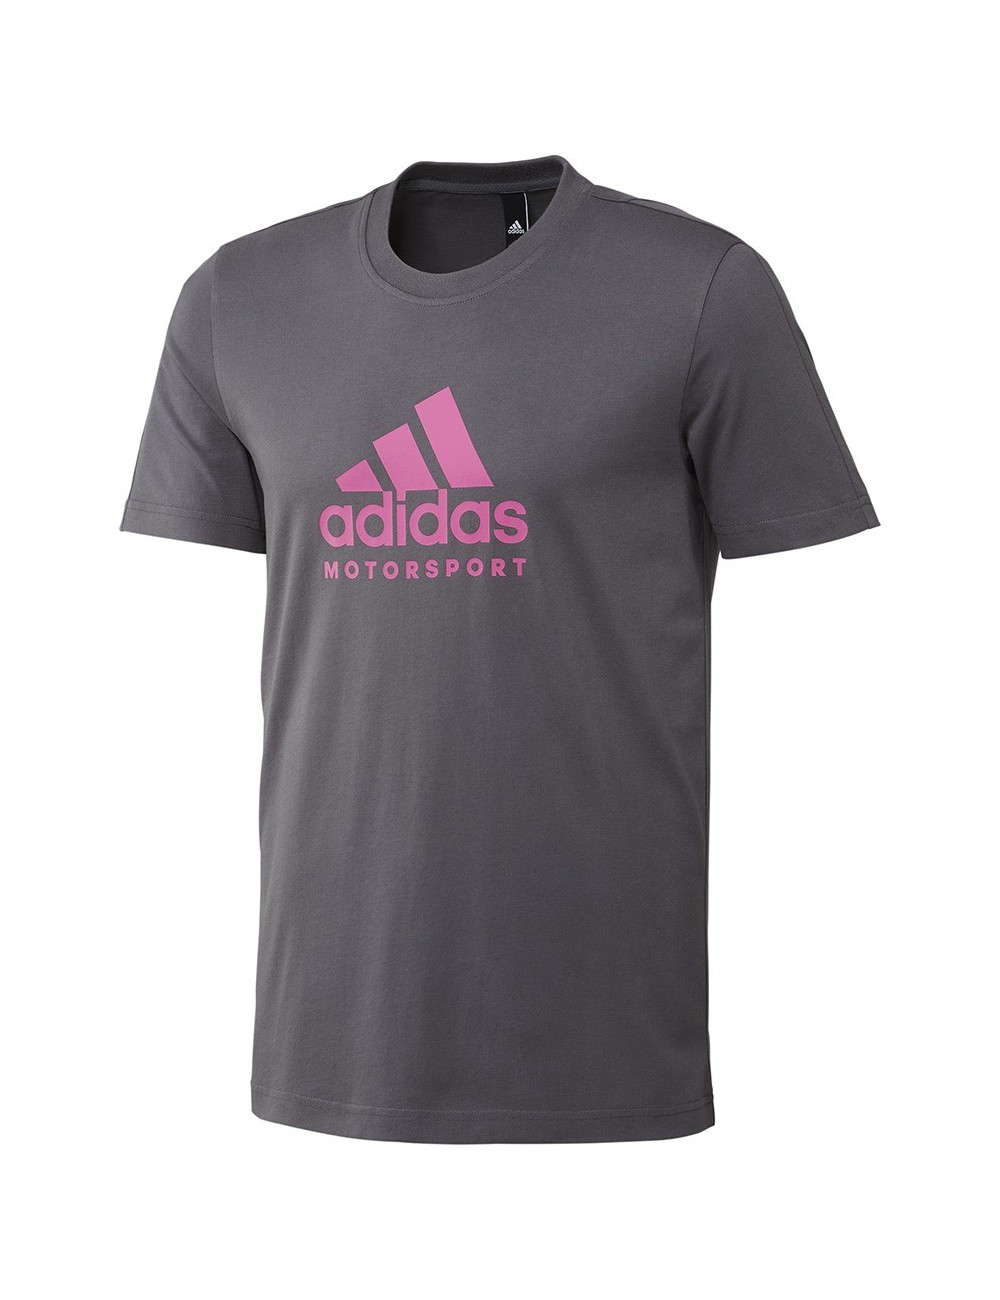 Adidas Motorsport Rosa T-Shirt